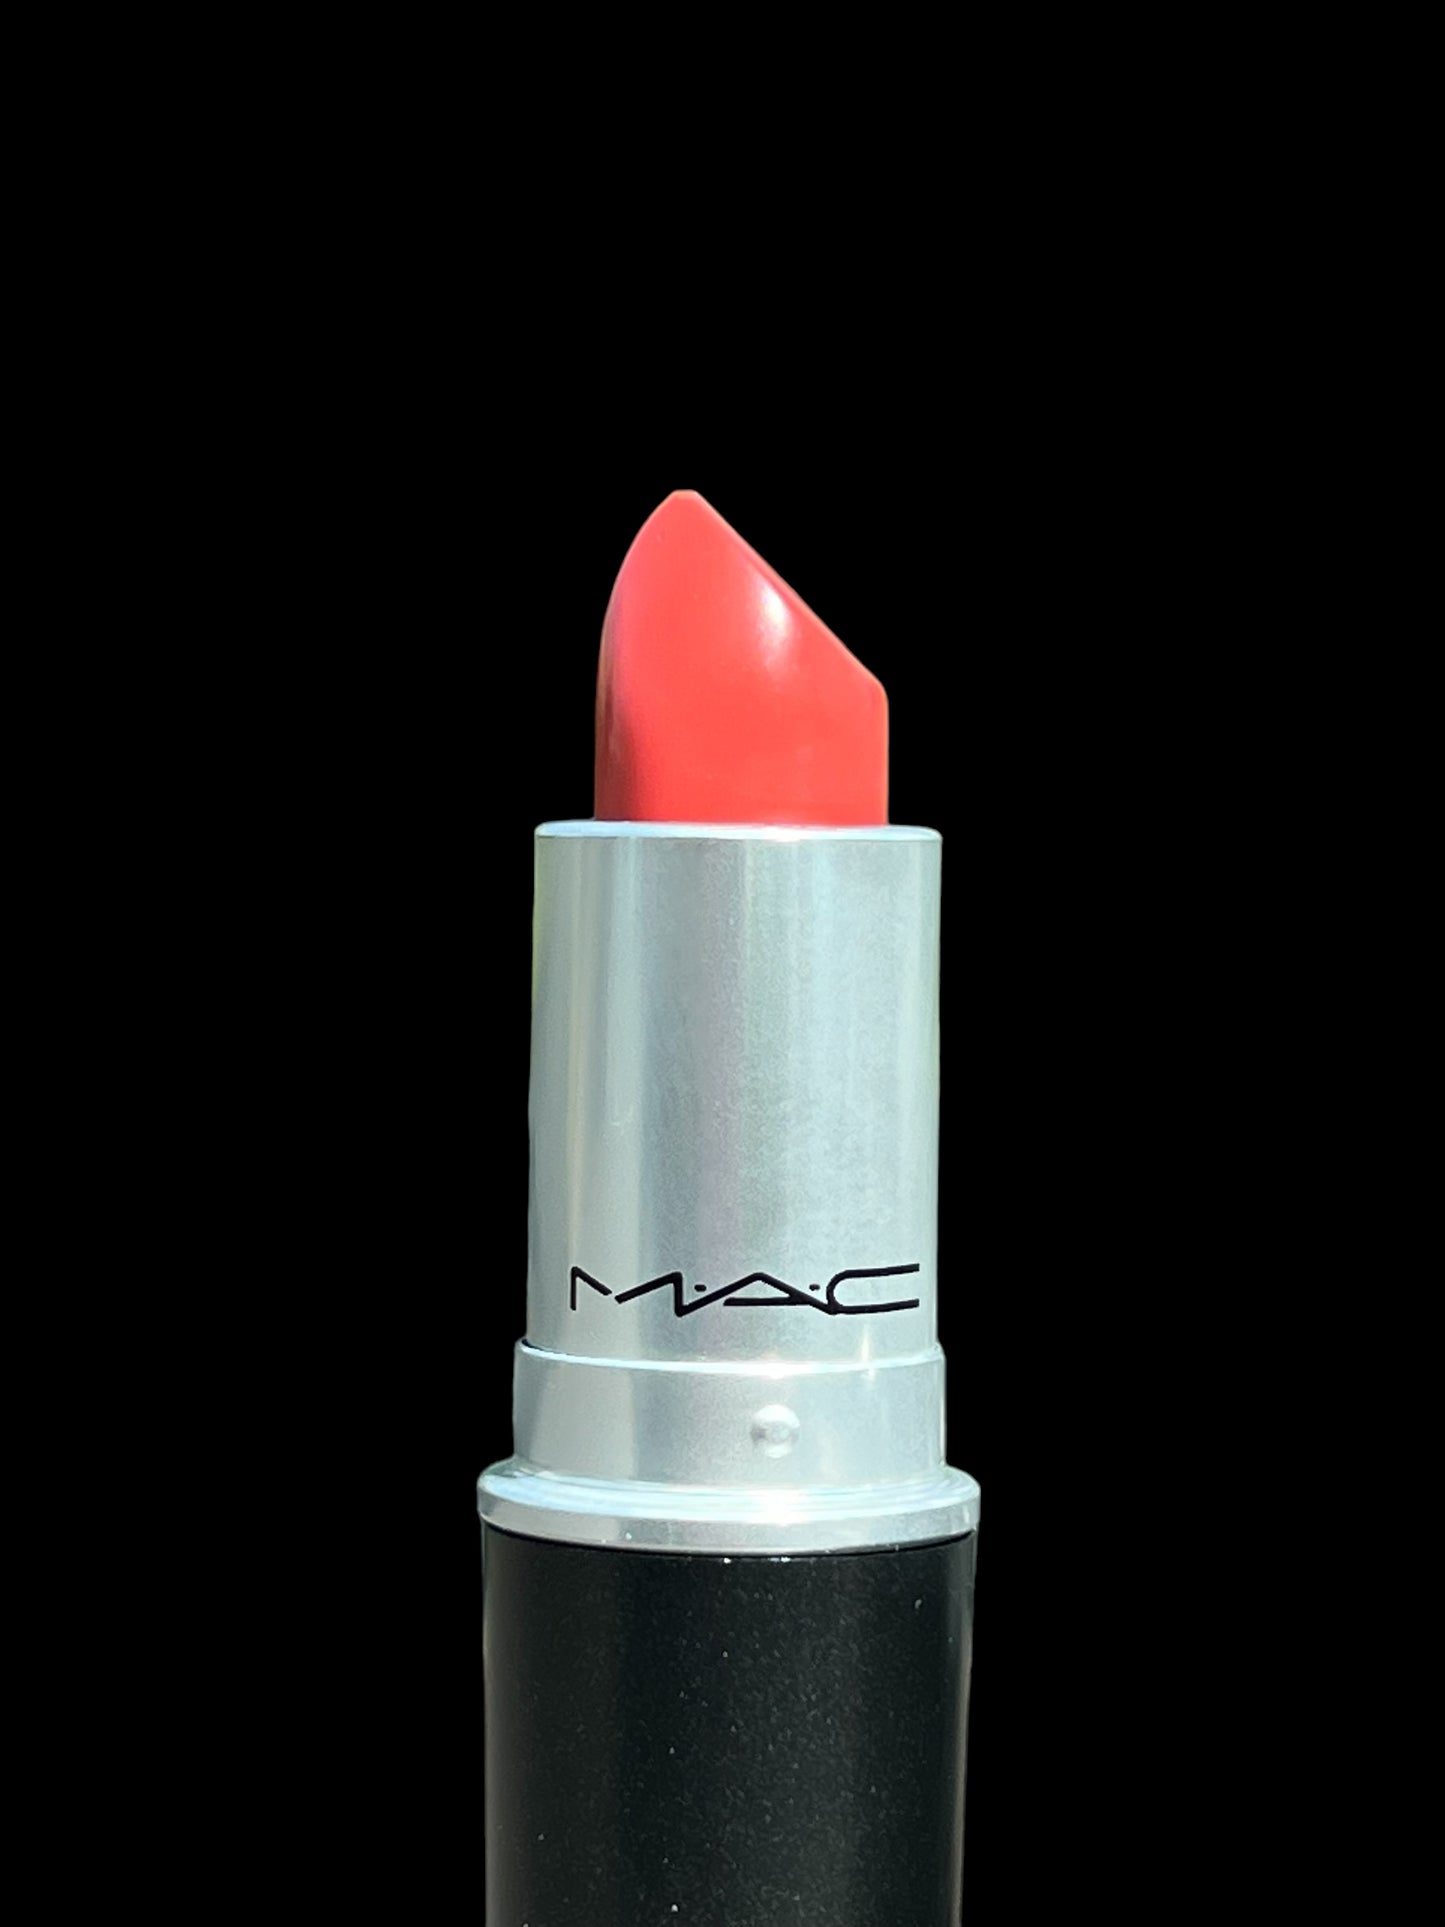 MAC Amplified Lipstick in VEGAS VOLT